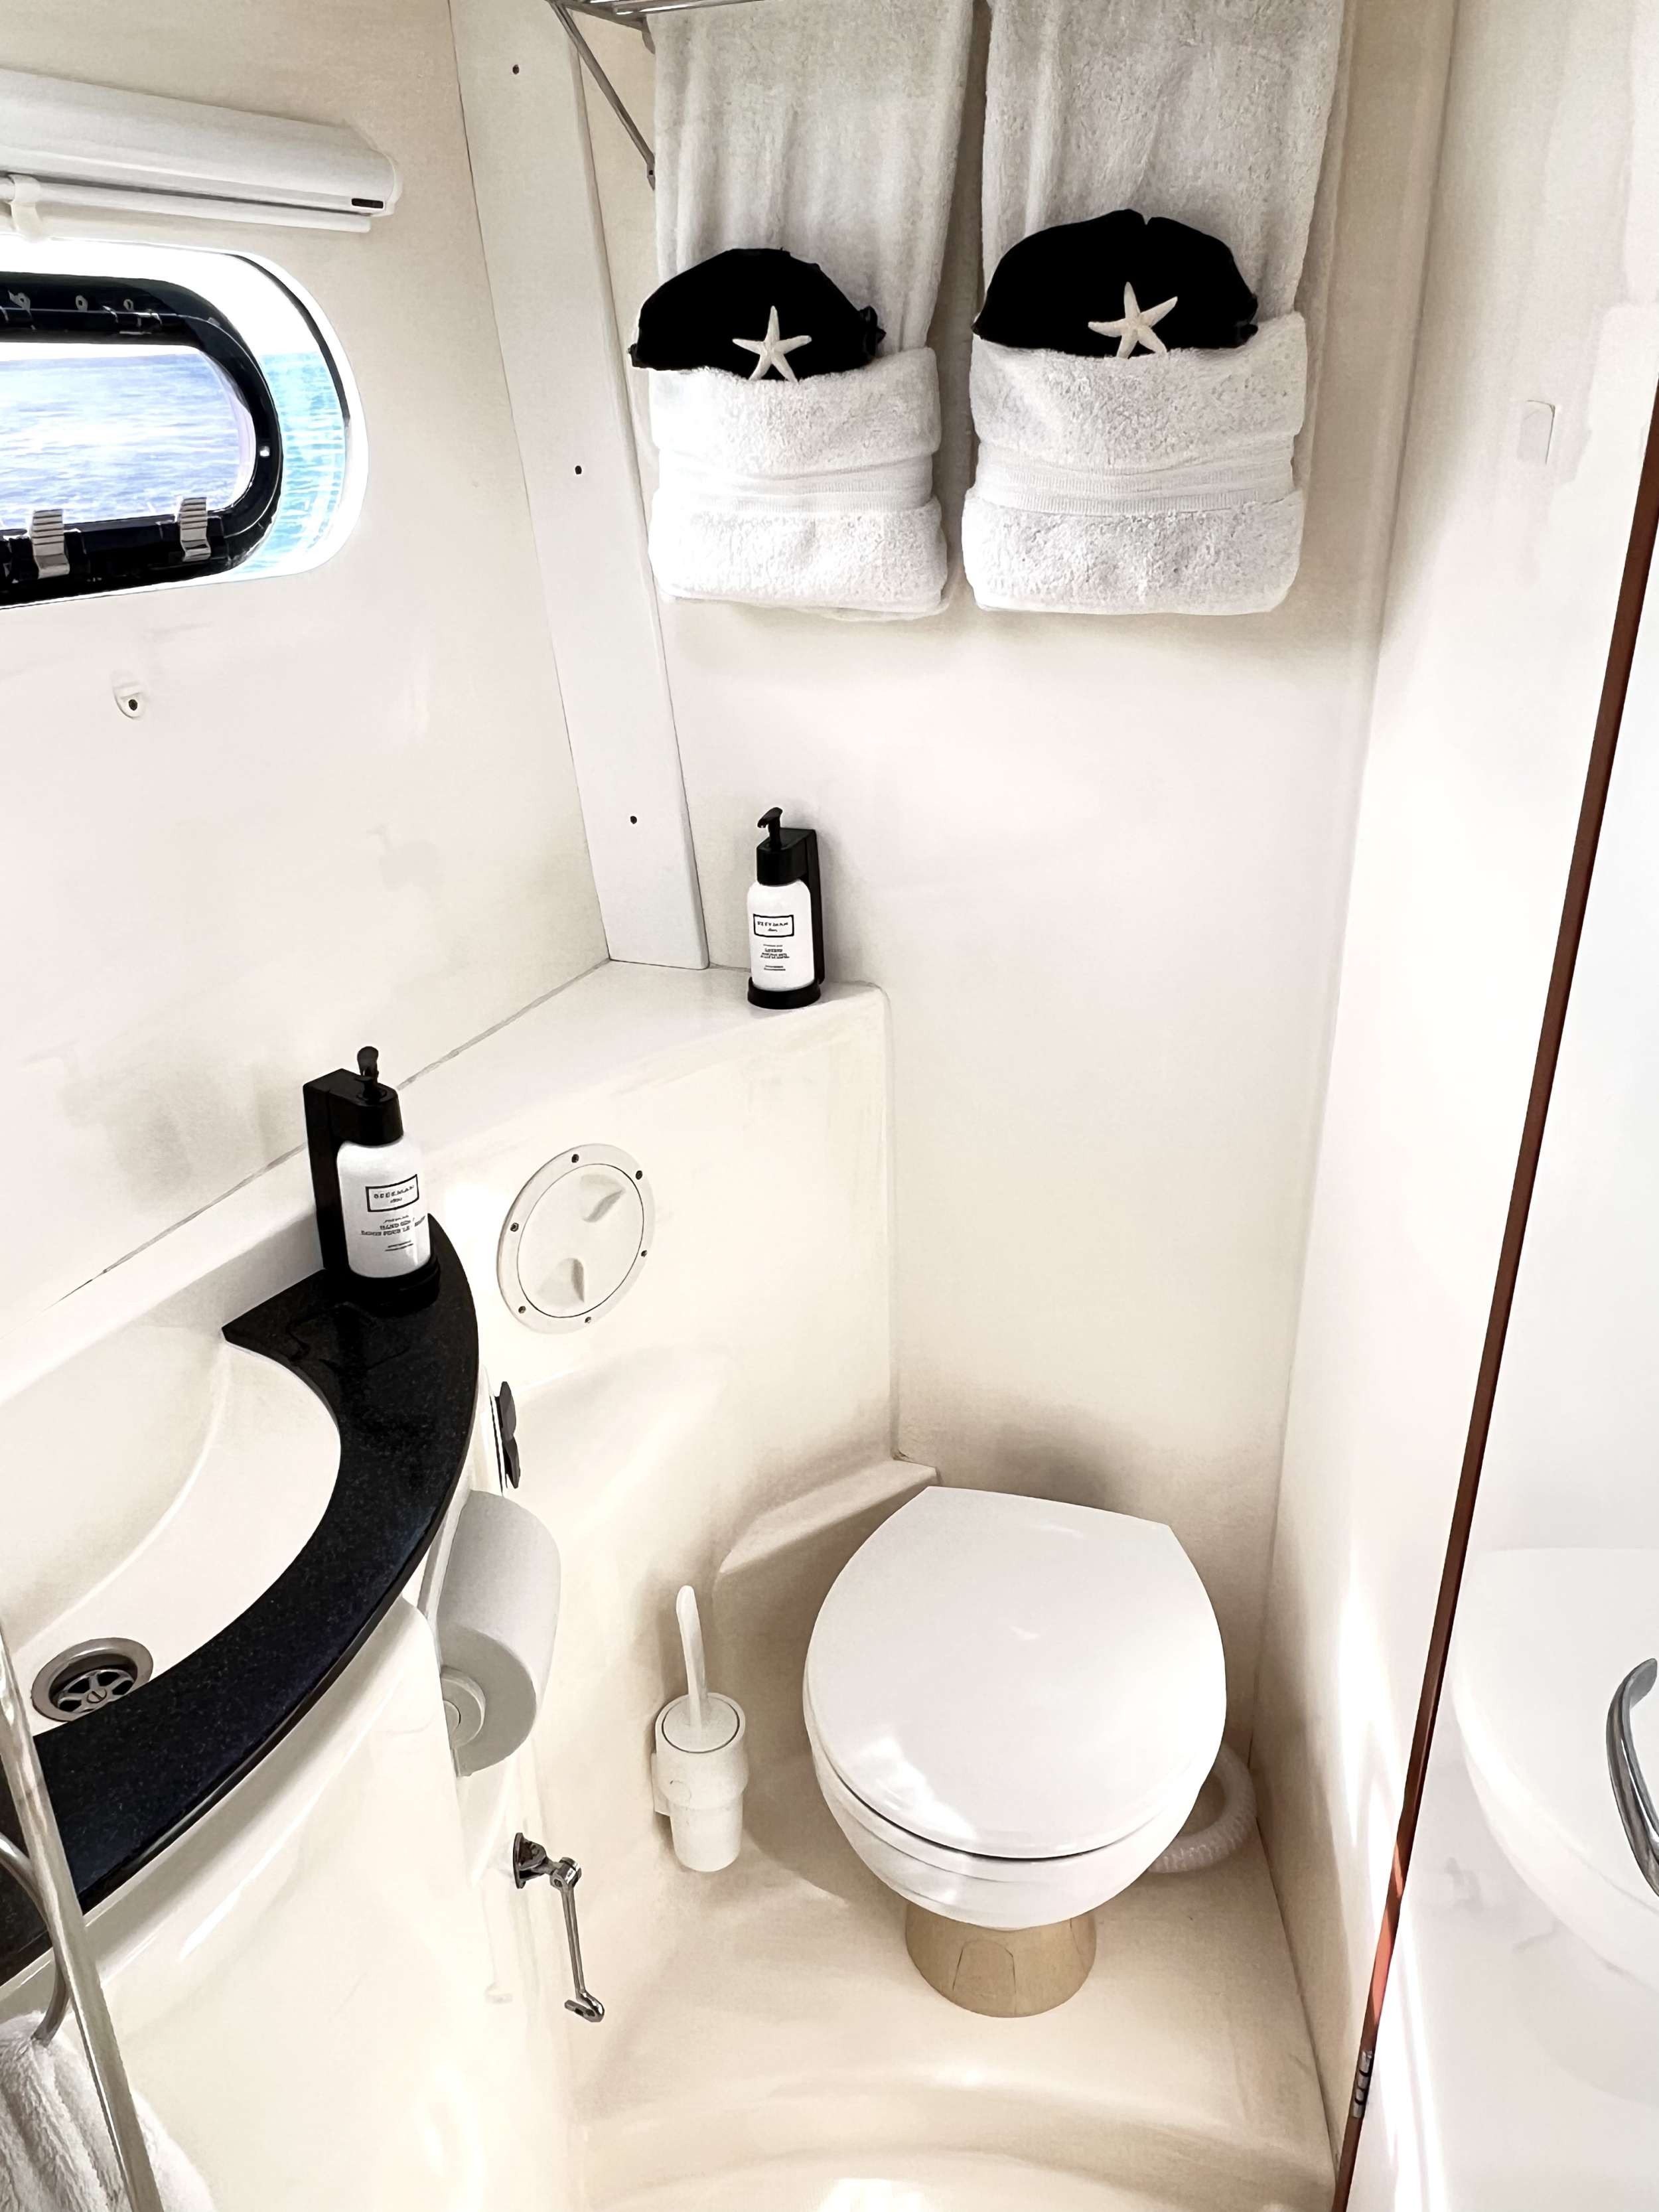 En suite Bathrooms/Showers in each cabin. (All bathrooms and showers are identical in all cabins.)